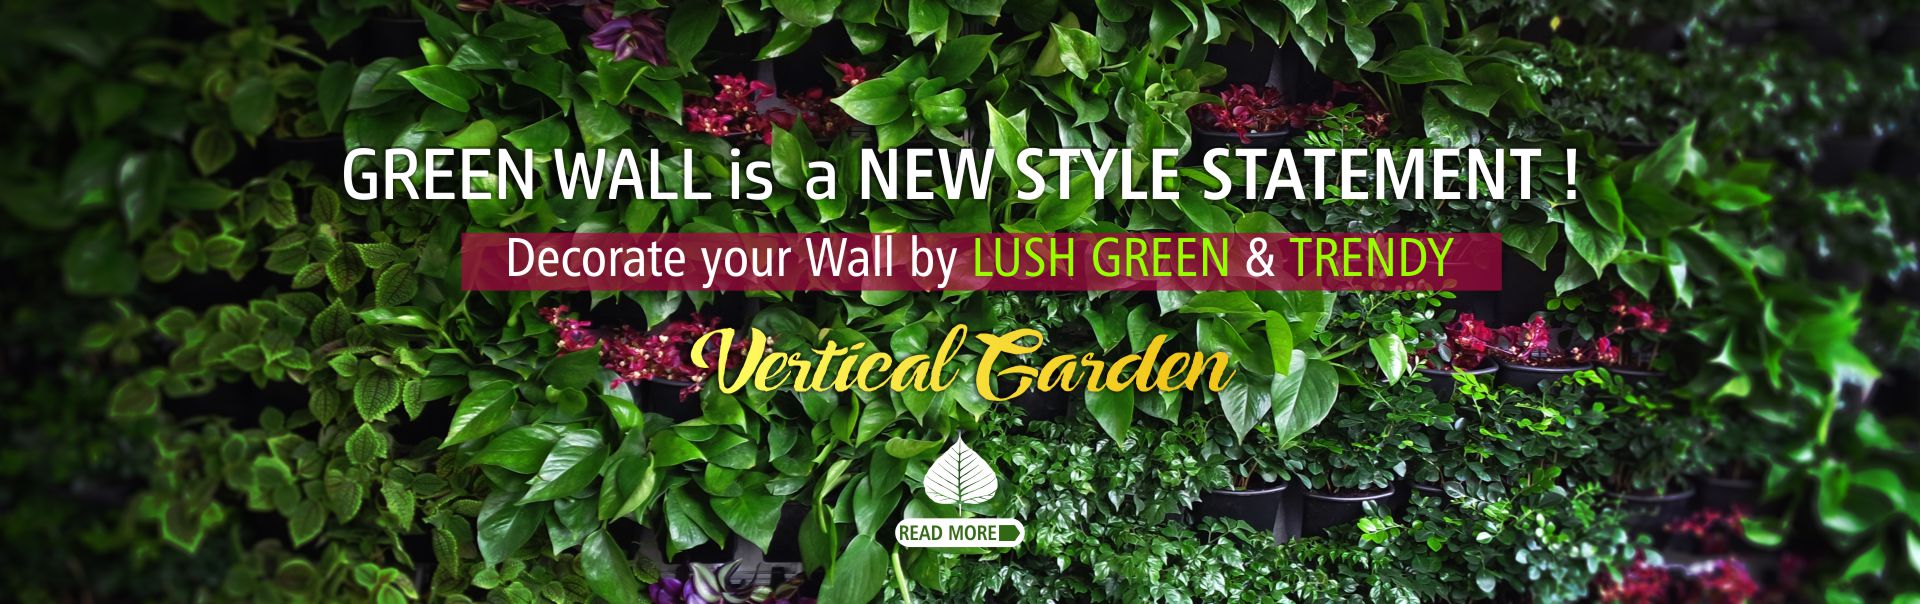 Vertical Garden Green Wall Delhi Gurgaon Noida India